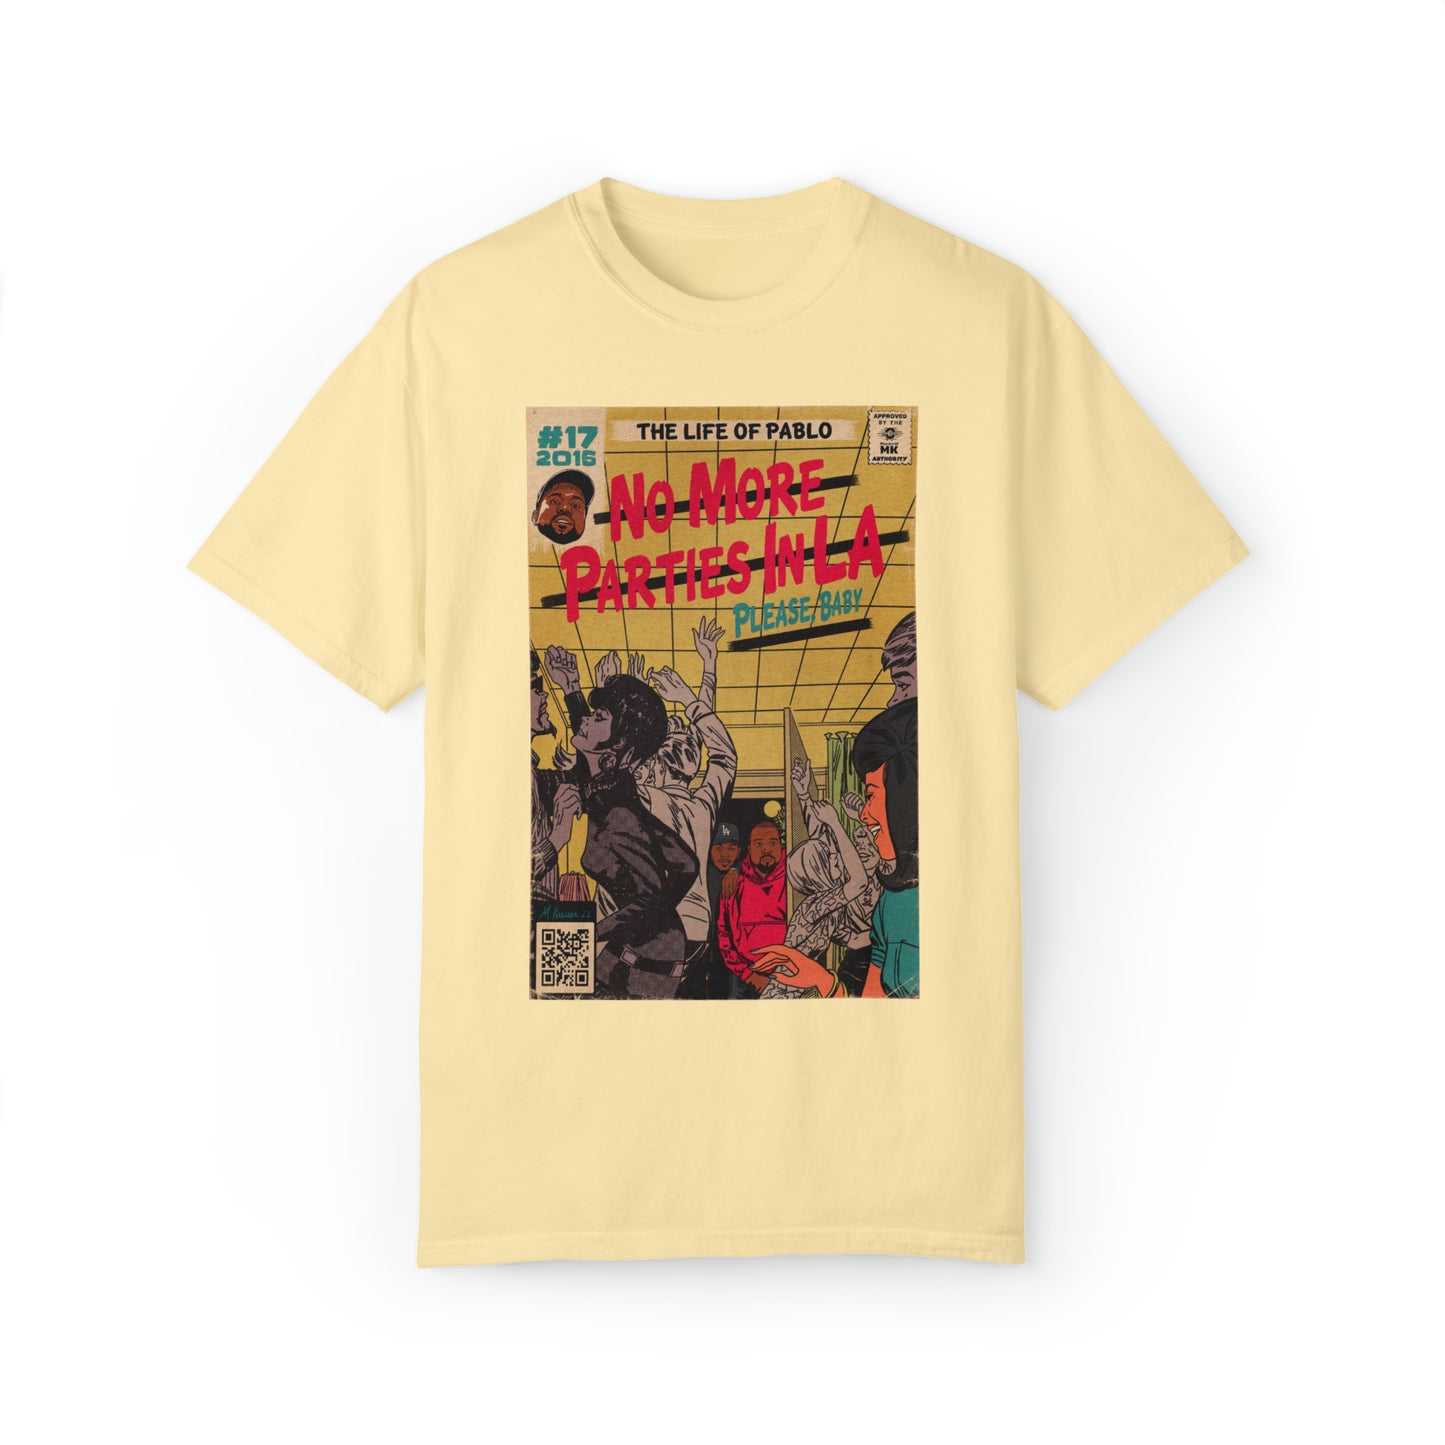 Kanye West & Kendrick Lamar - No More Parties in LA - Unisex Comfort Colors T-shirt